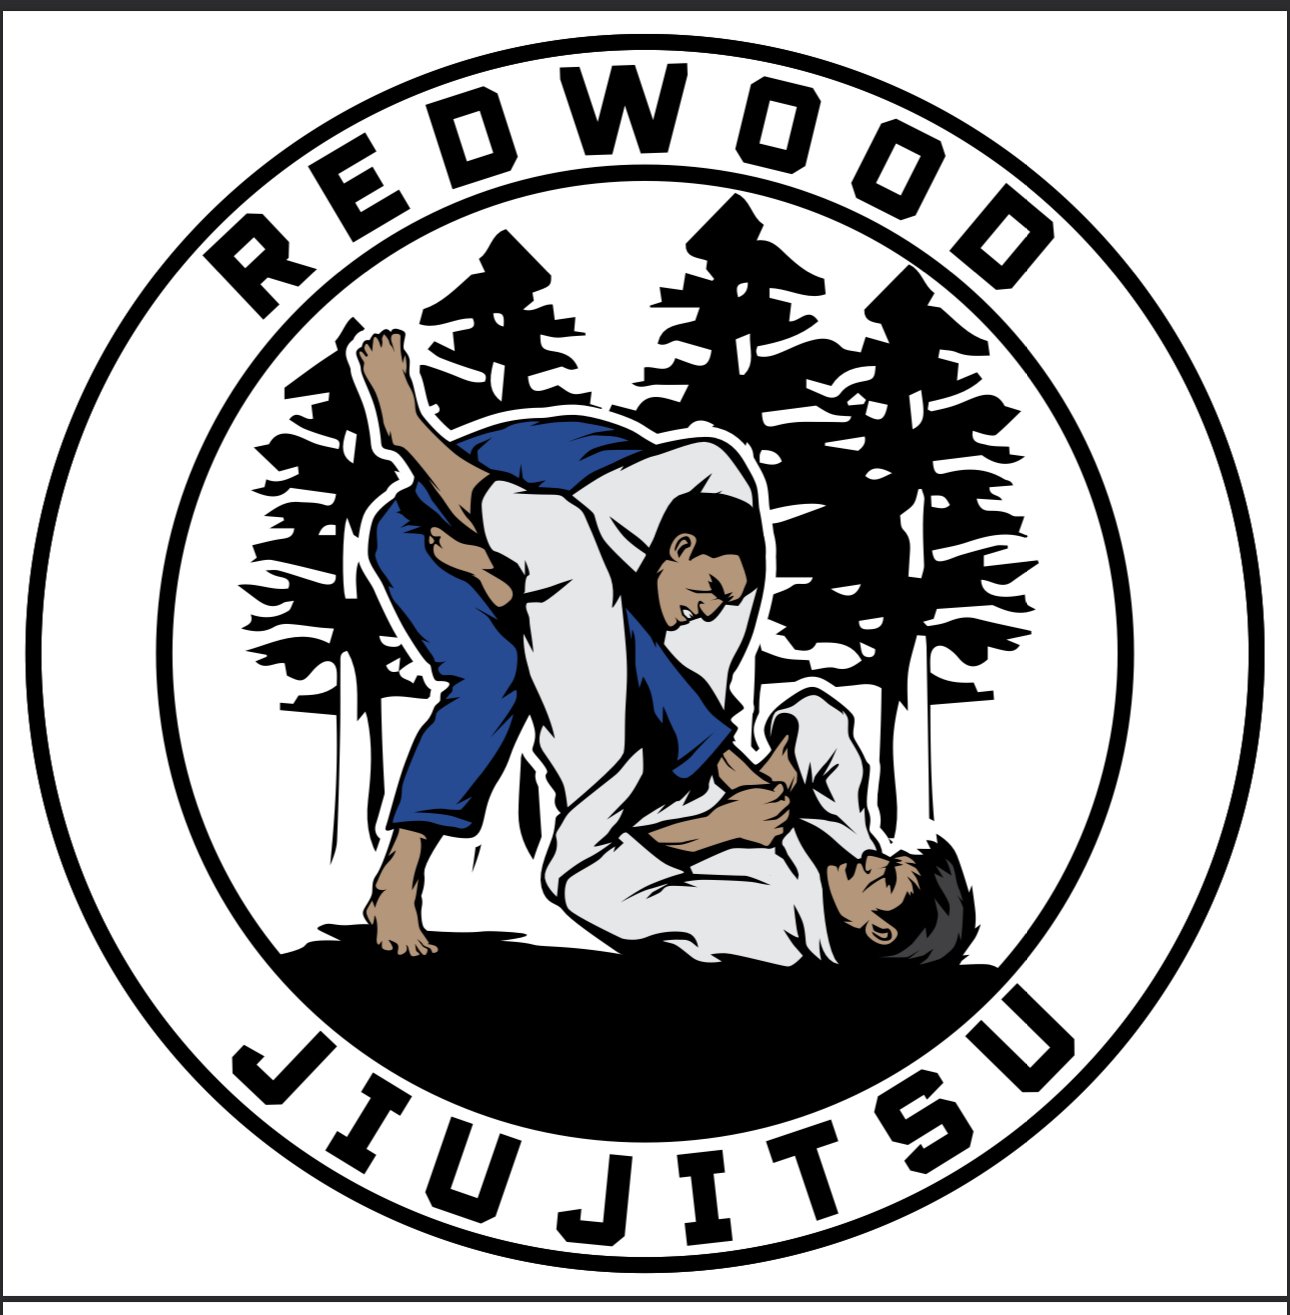 Redwood Jiu-Jitsu